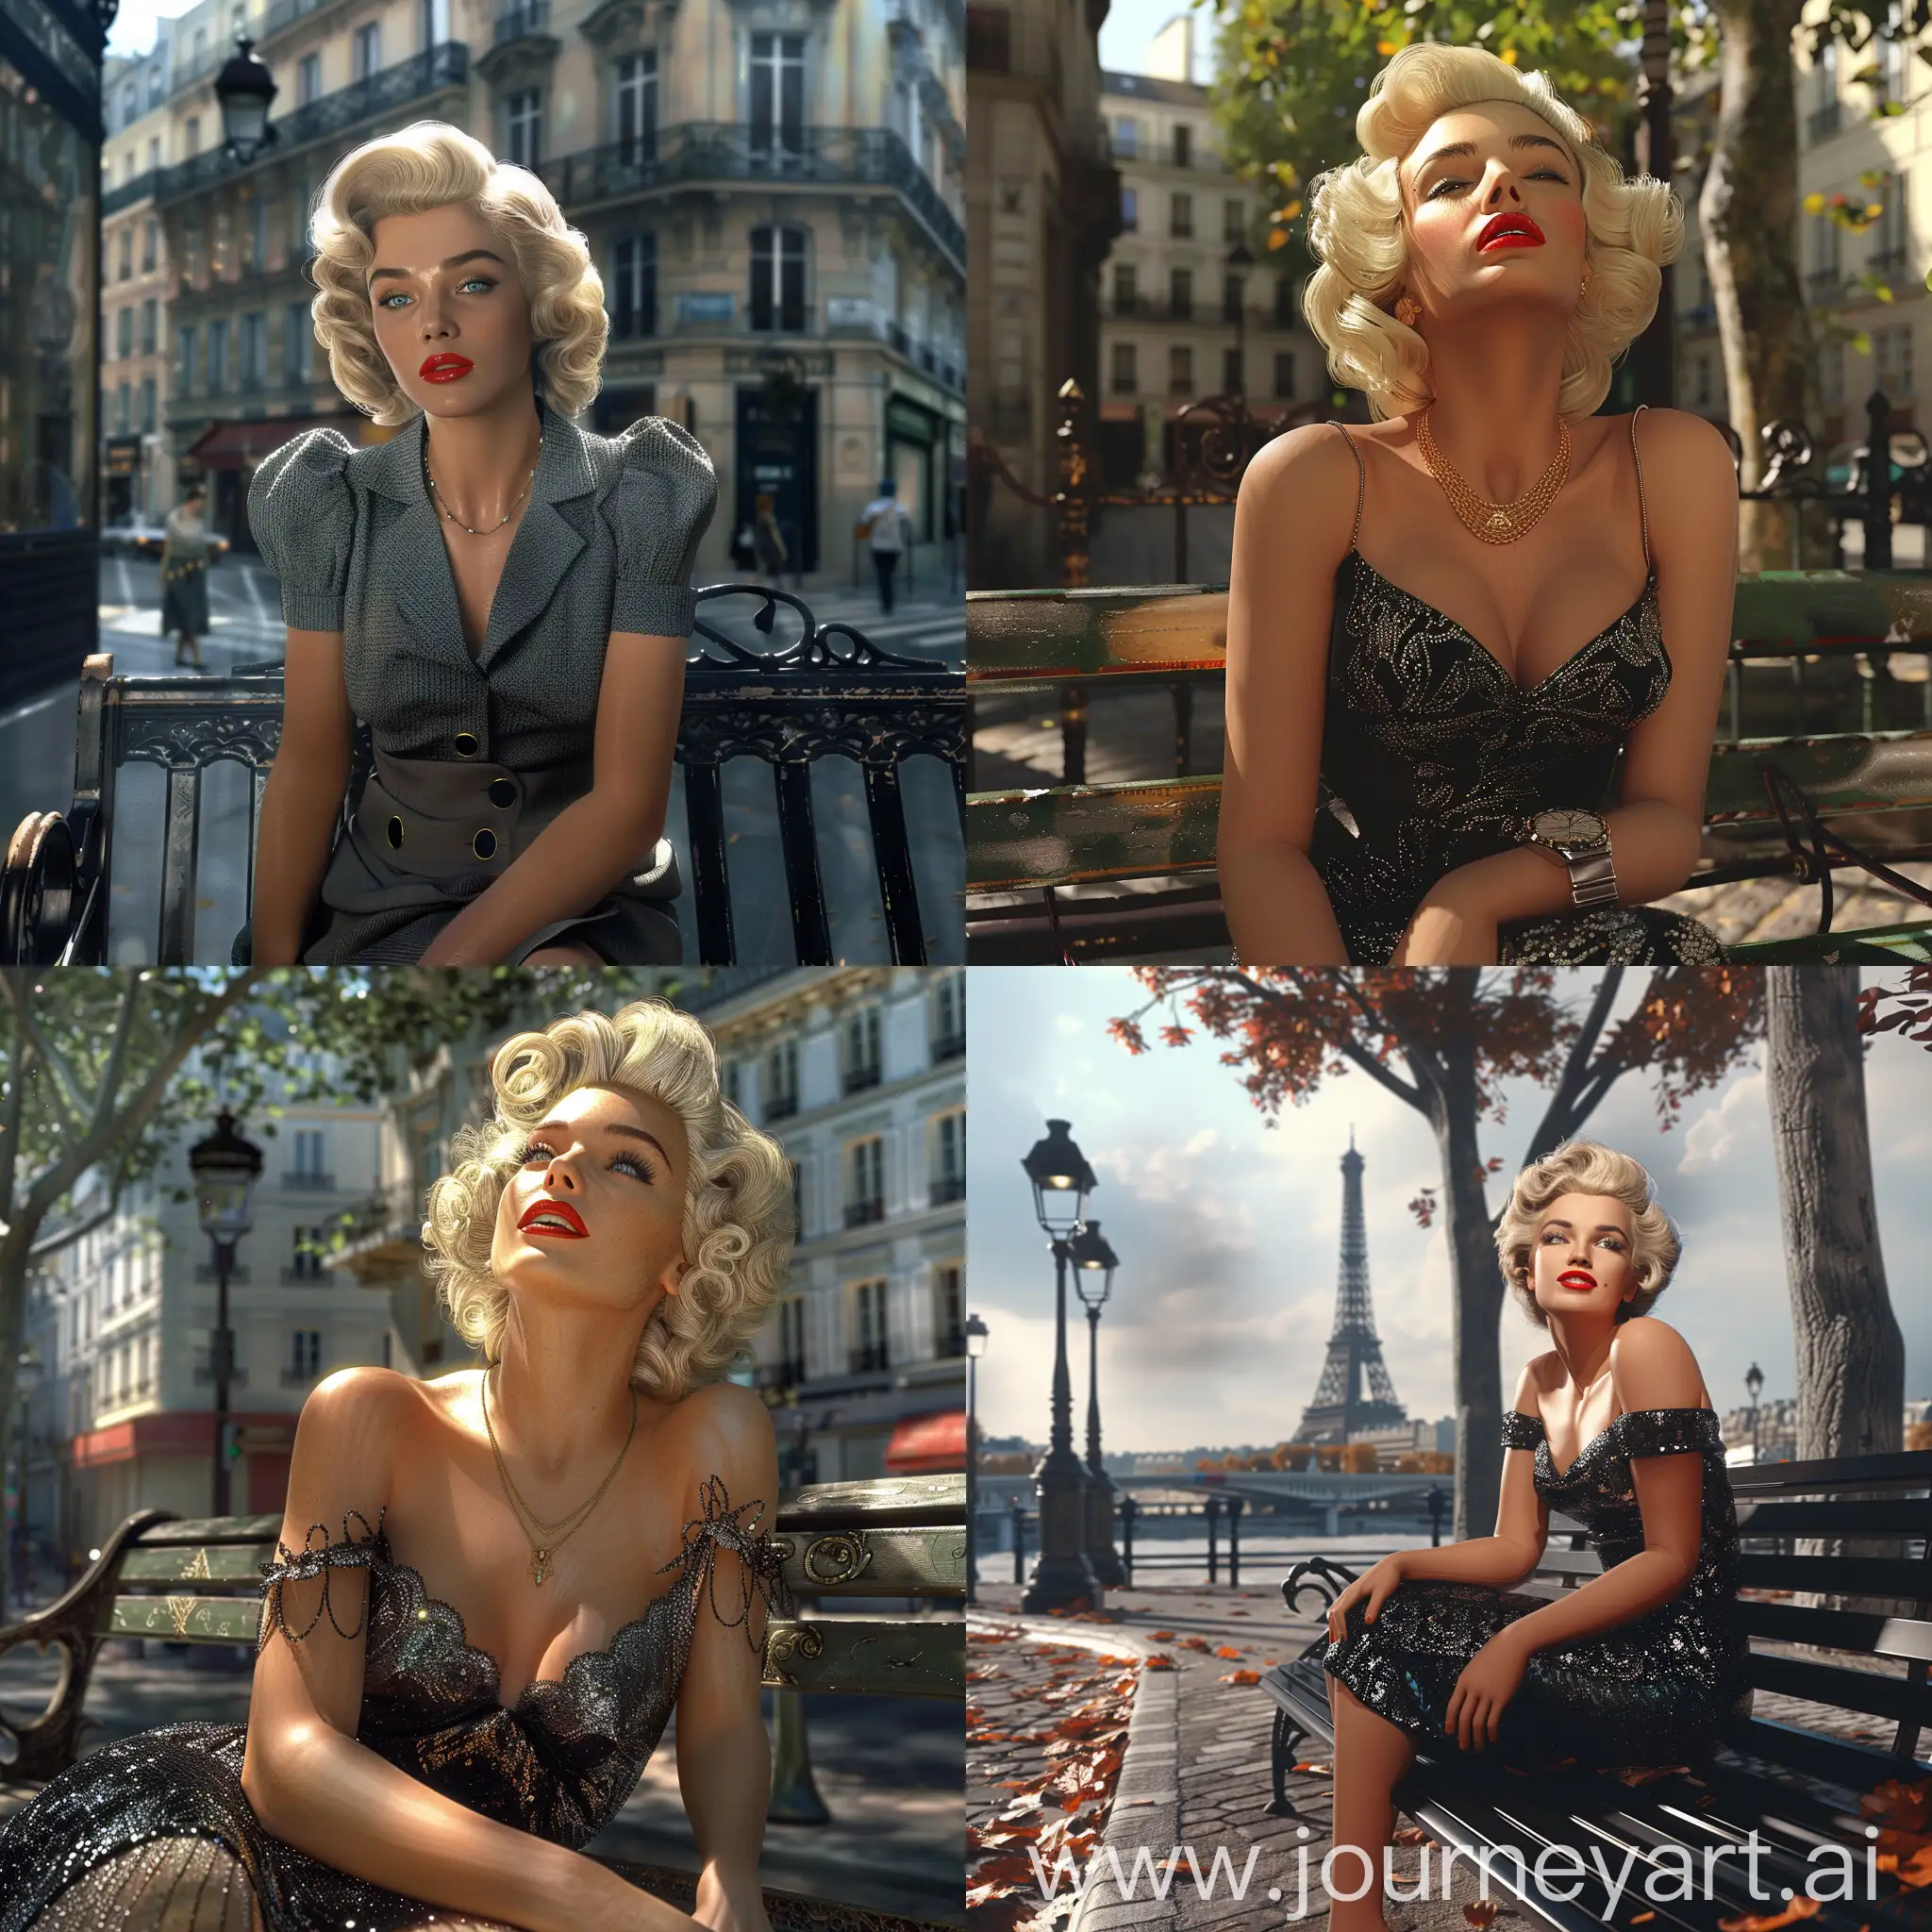 Marilyn Monroe on a Parisian bench, photorealistic, detailed, 8k